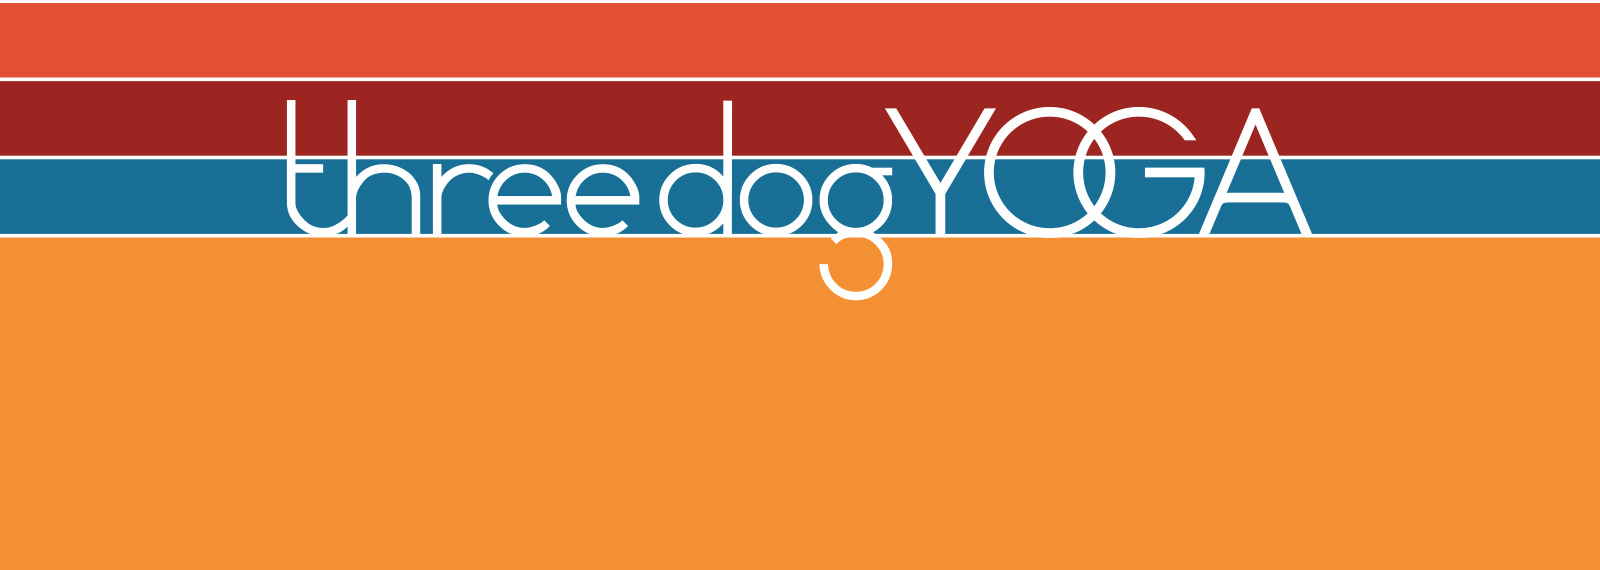 Three Dog Yoga Practice Podcast